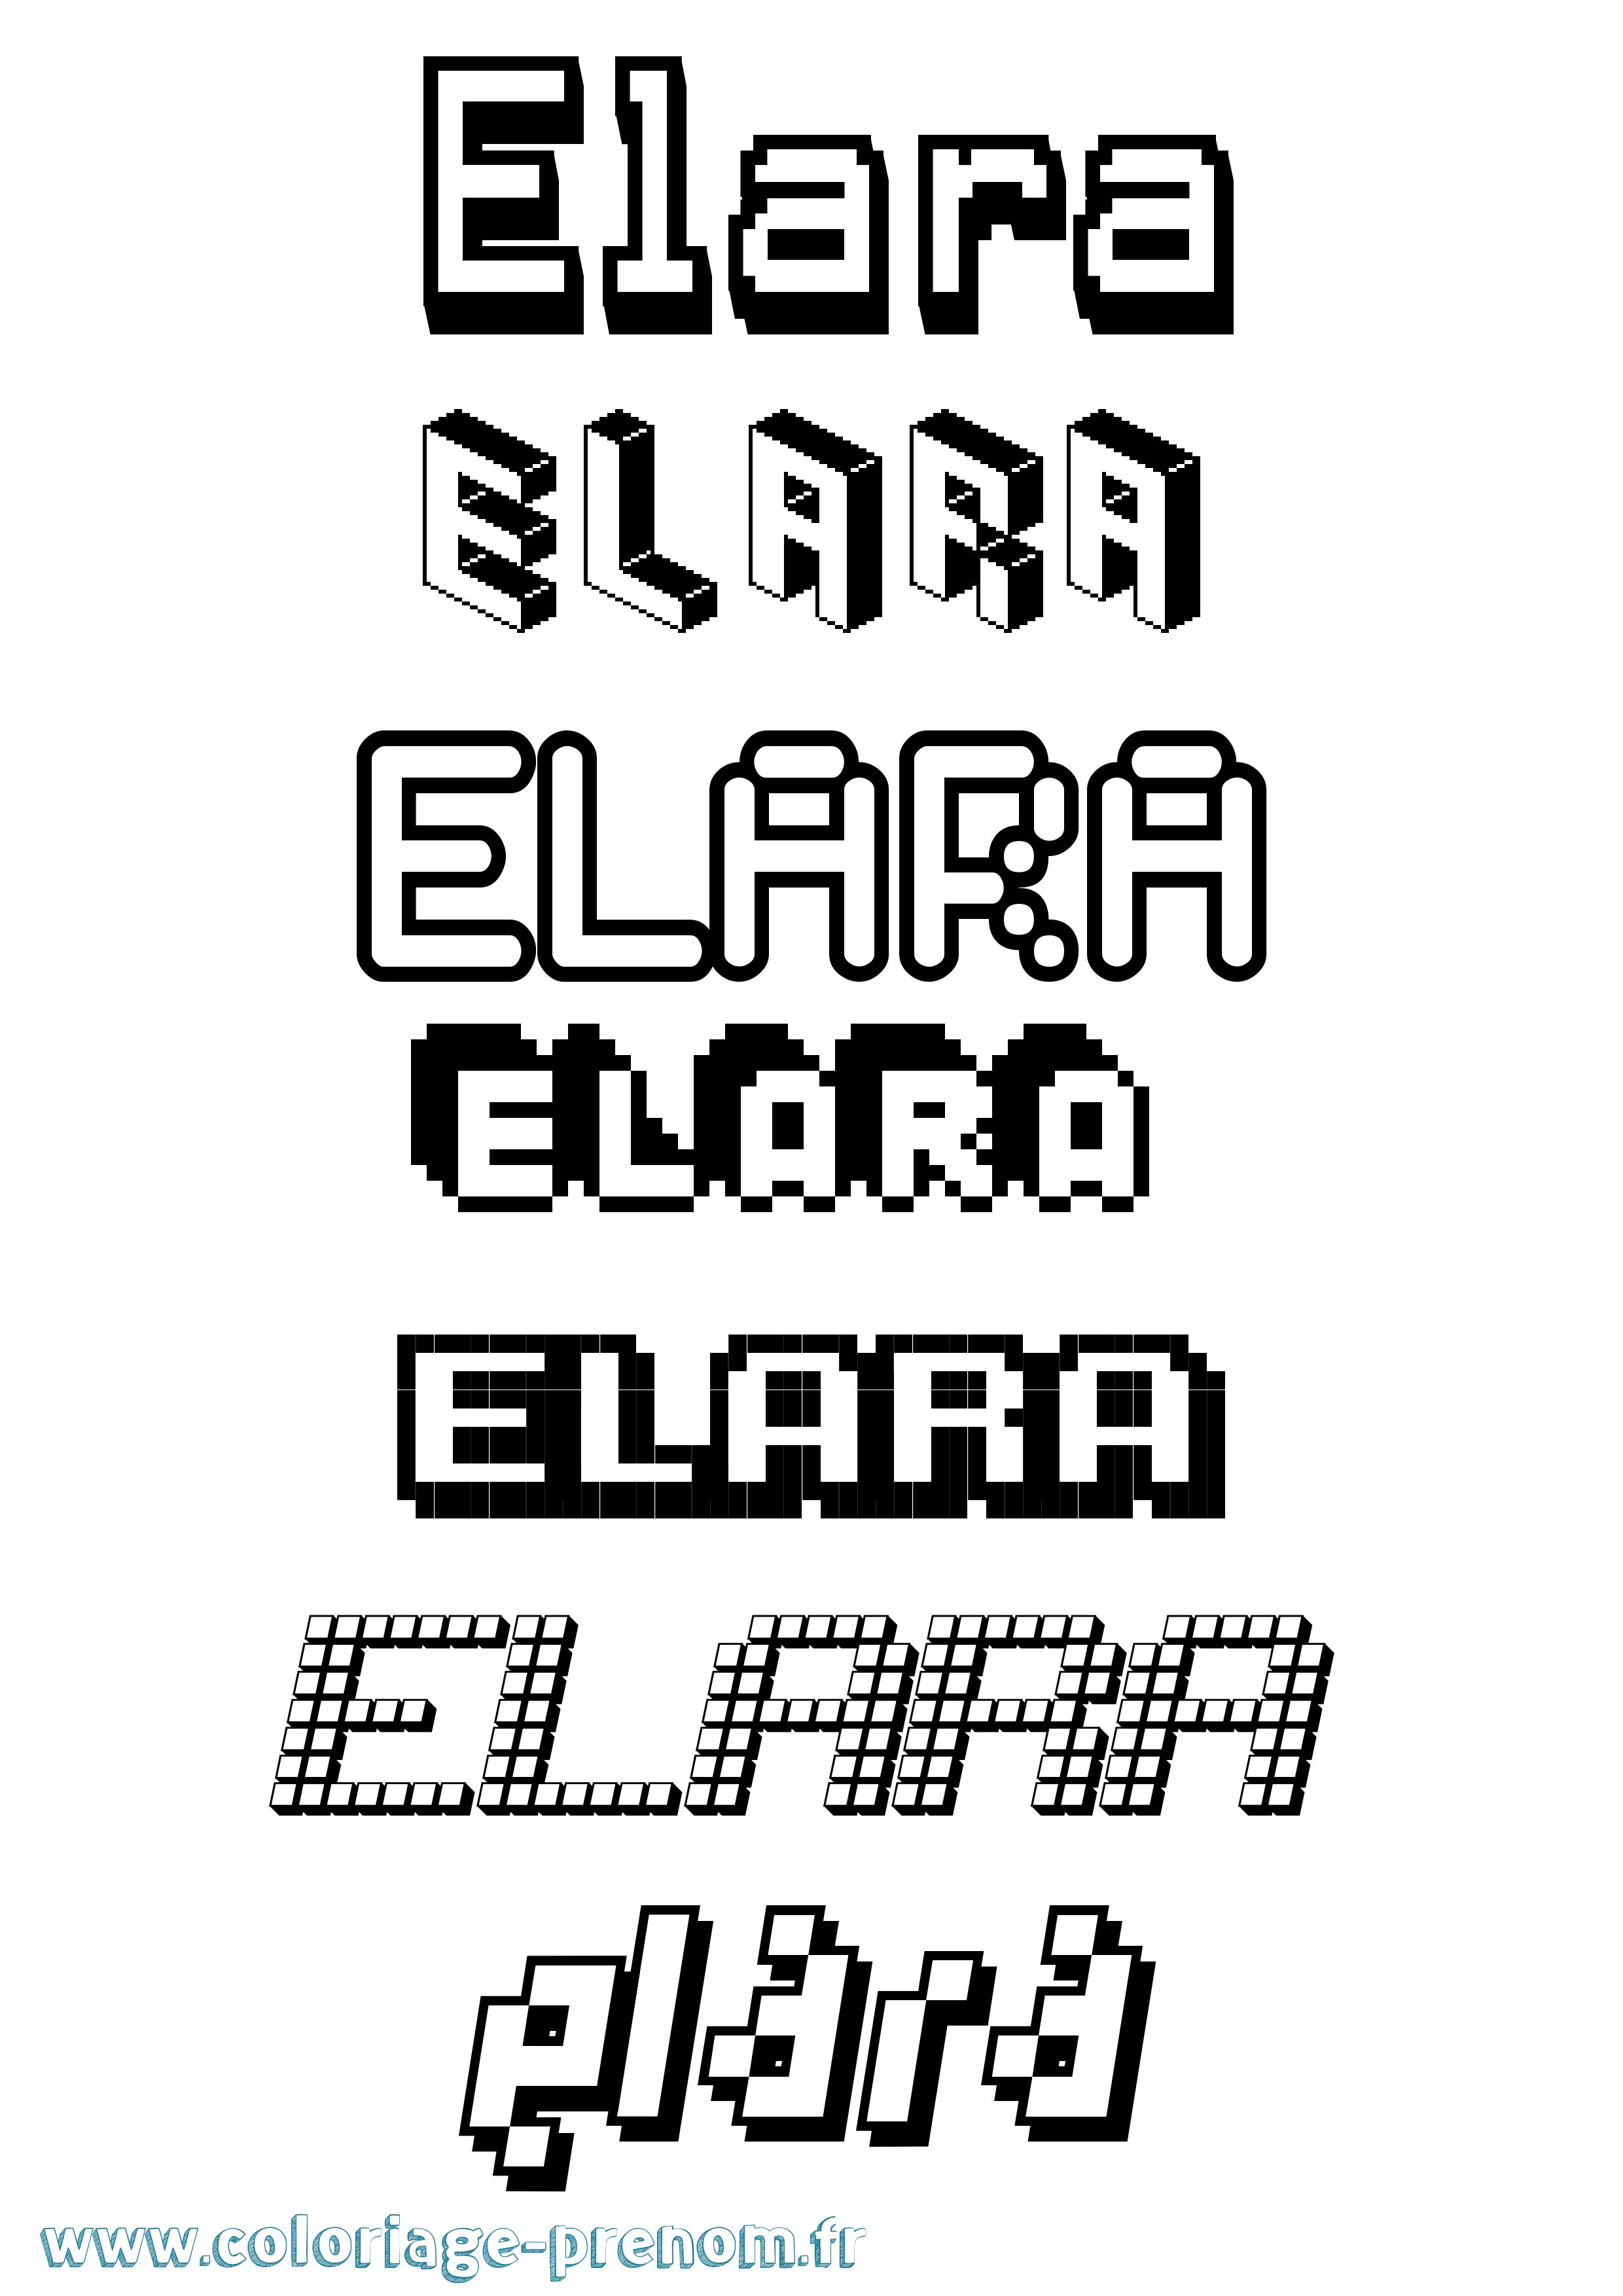 Coloriage prénom Elara Pixel